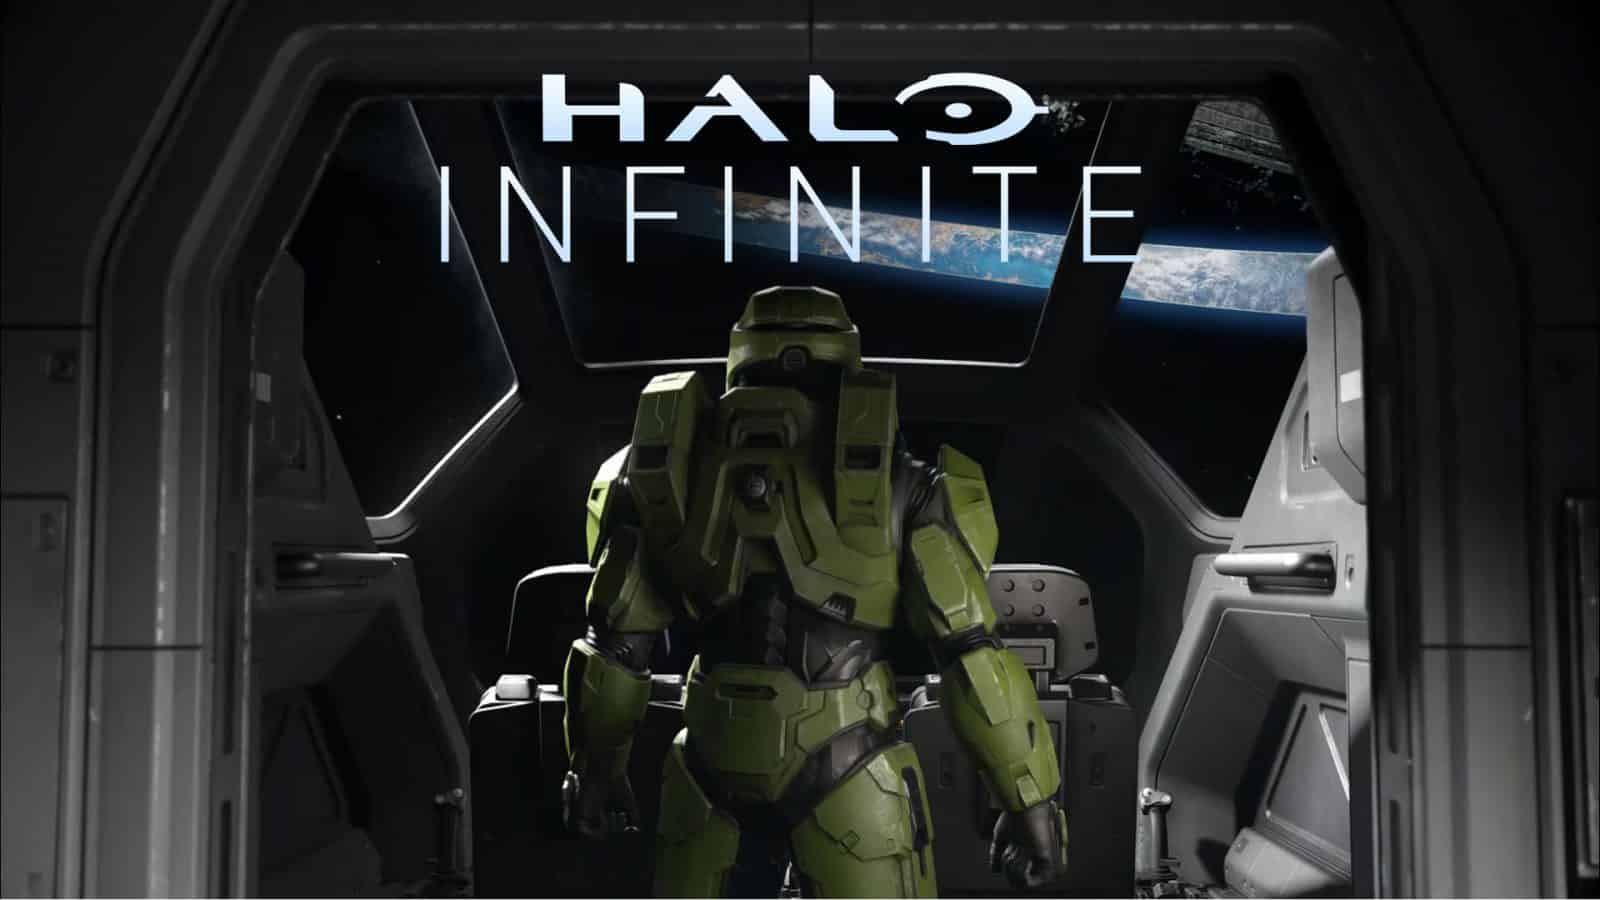 Xbox E3 News: Halo Infinite is Coming